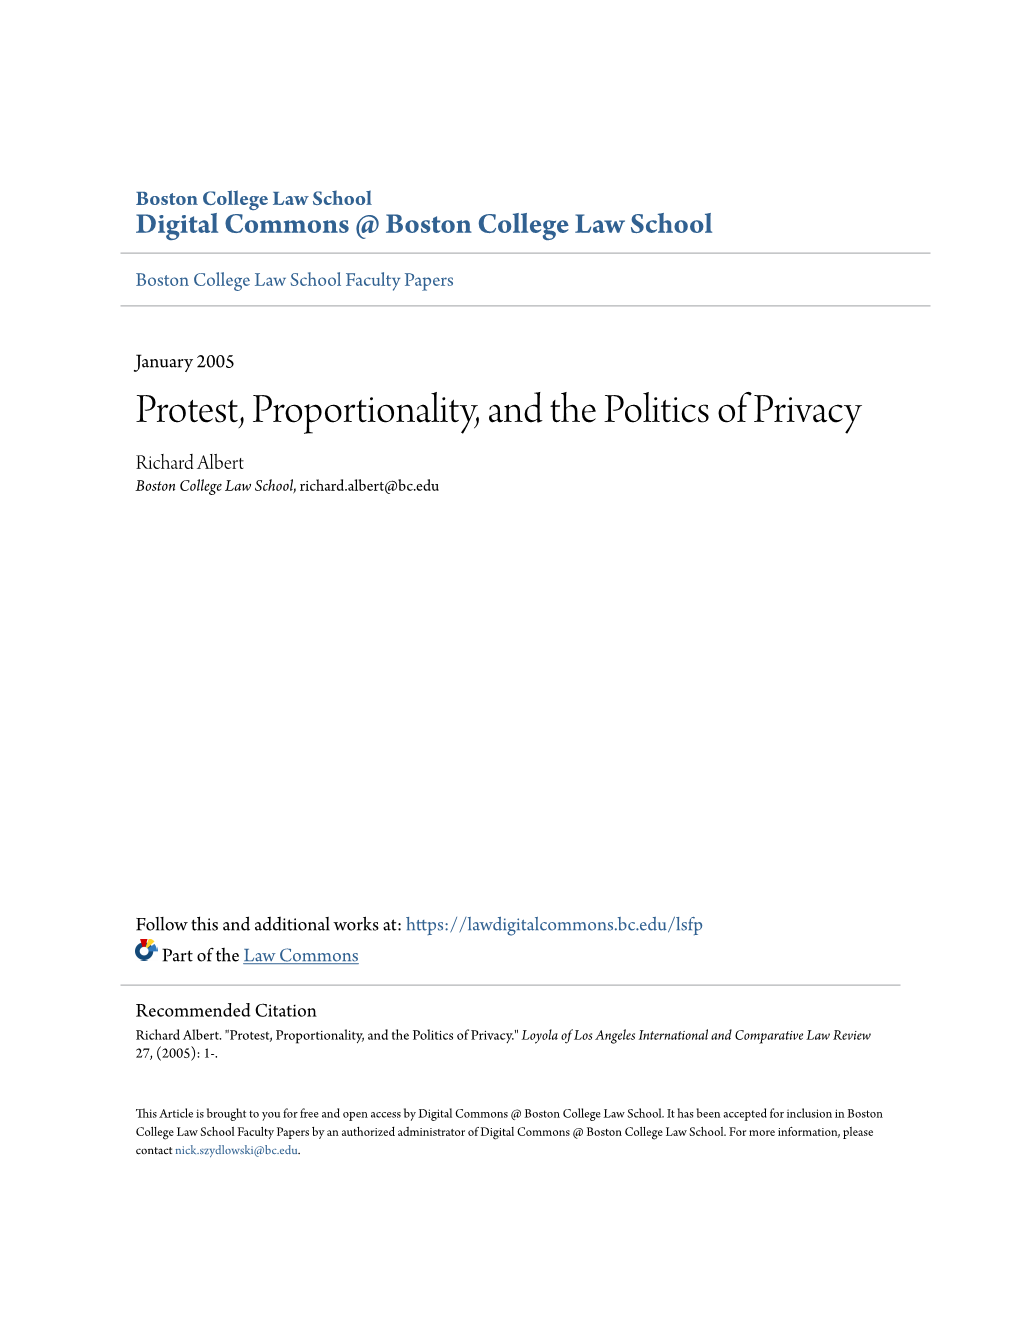 Protest, Proportionality, and the Politics of Privacy Richard Albert Boston College Law School, Richard.Albert@Bc.Edu